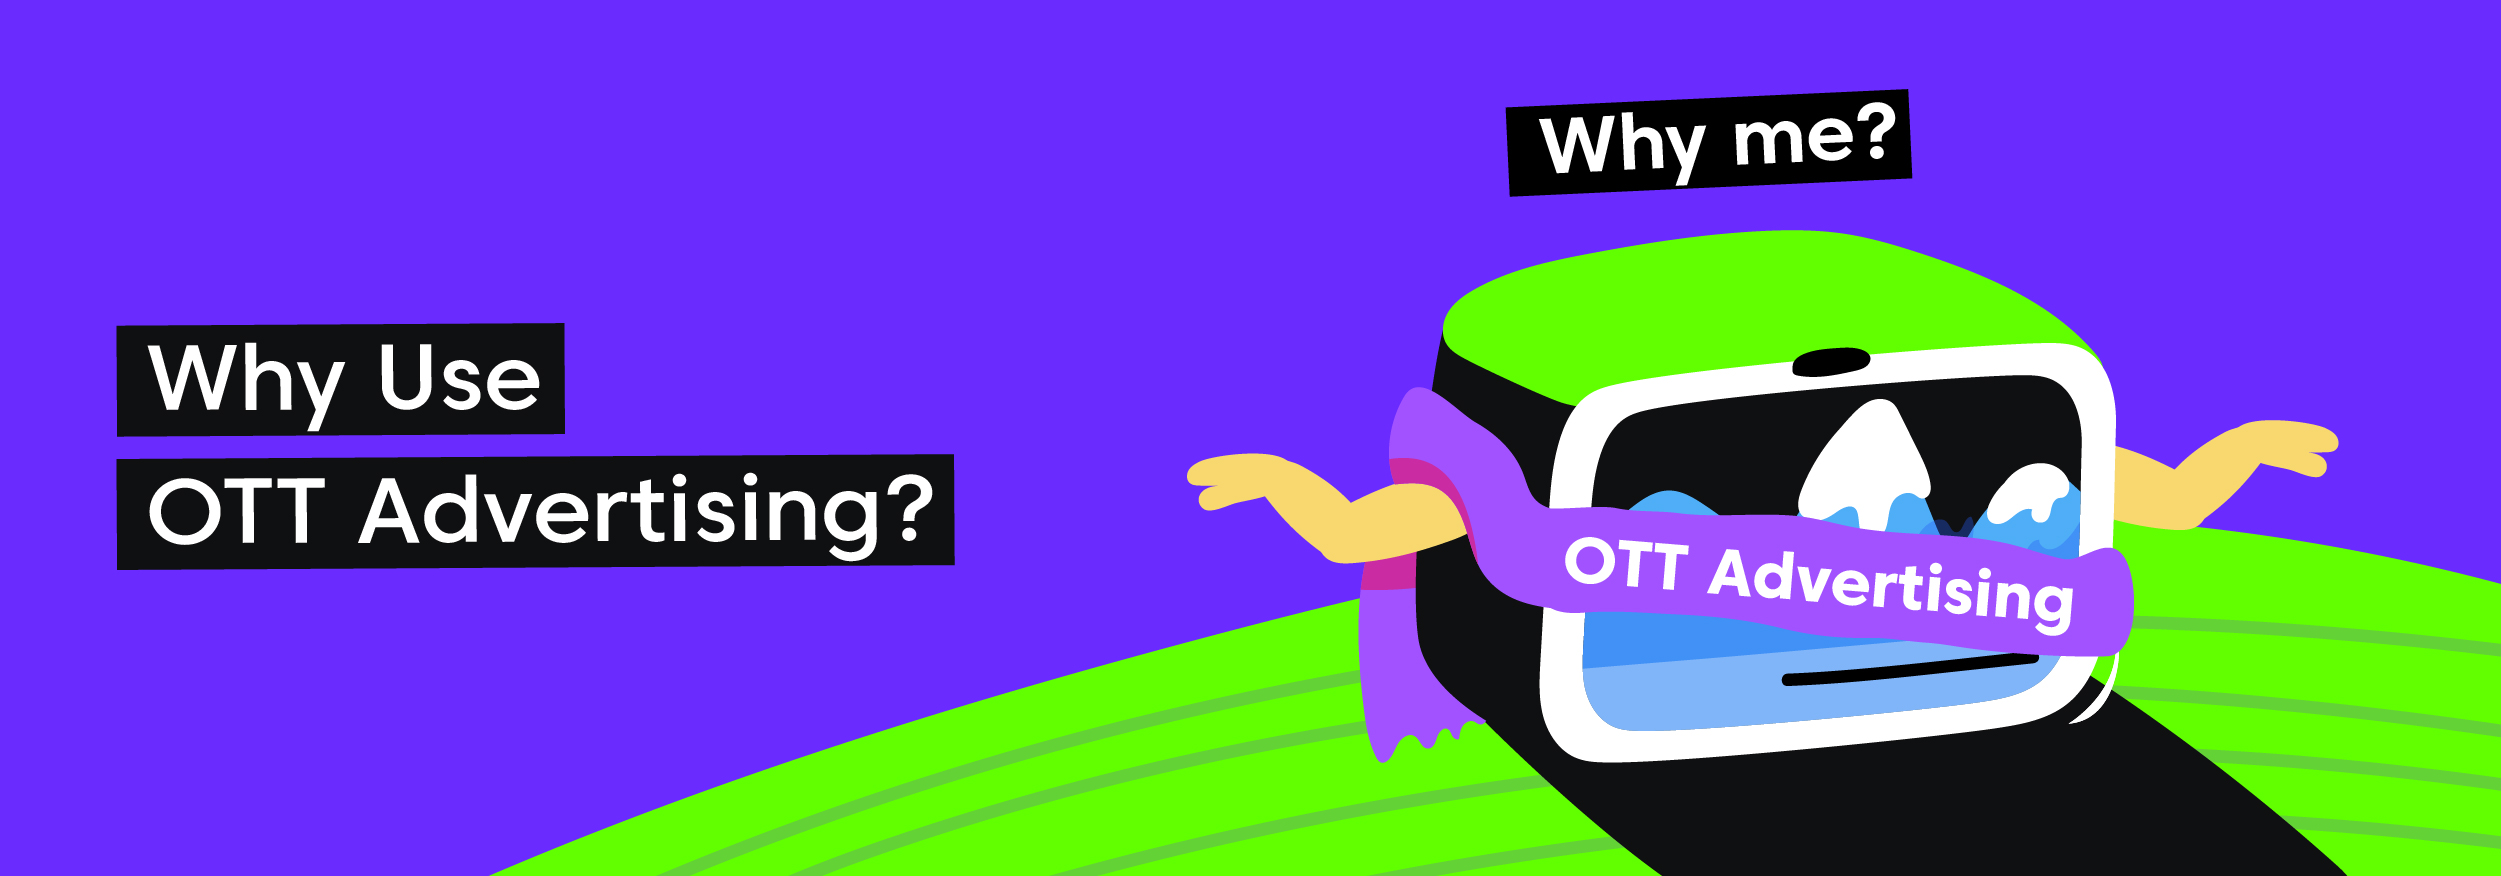 Why Use OTT Advertising?